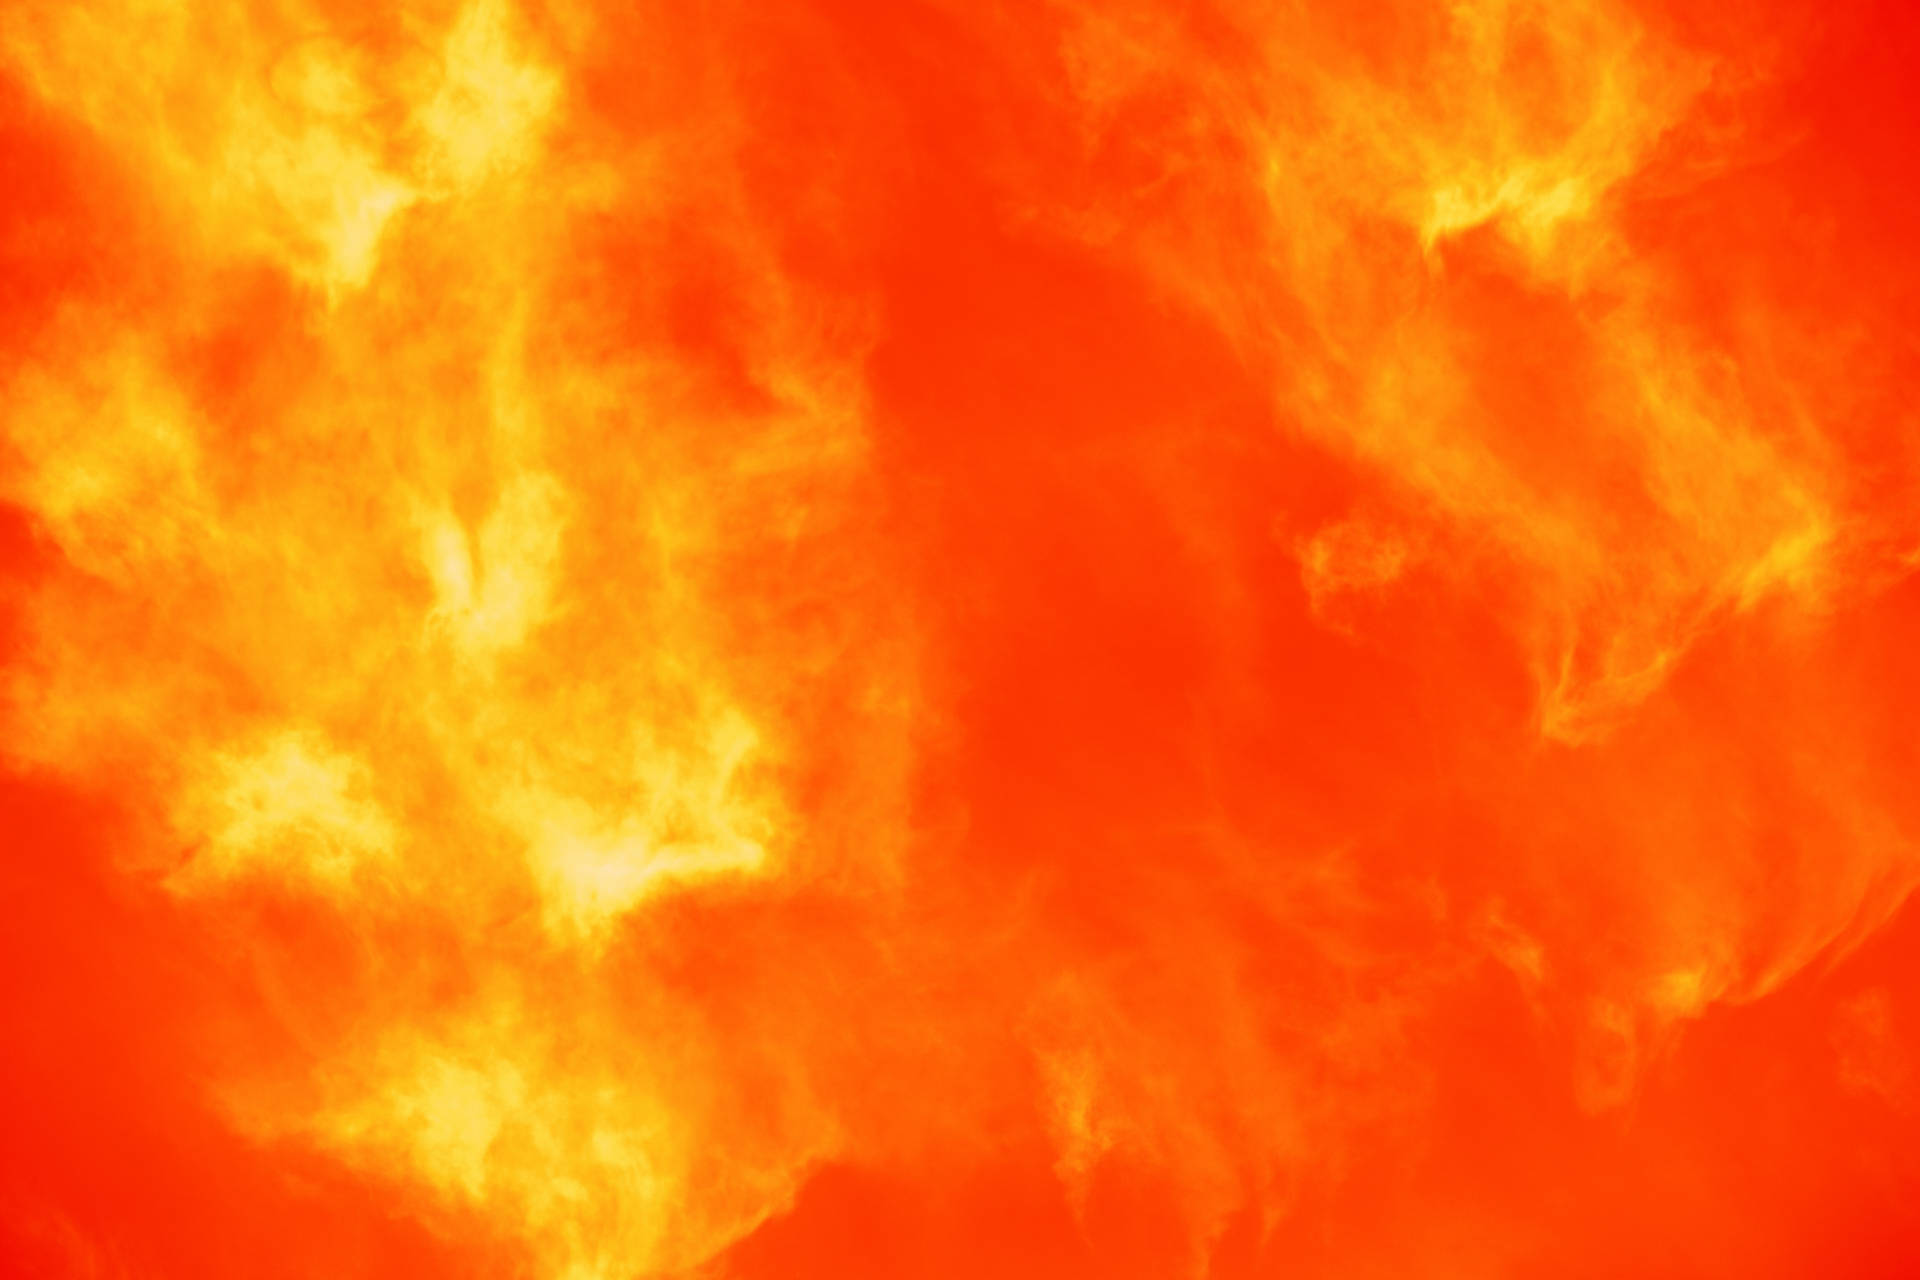 Burning Orange Screen Cover Picture